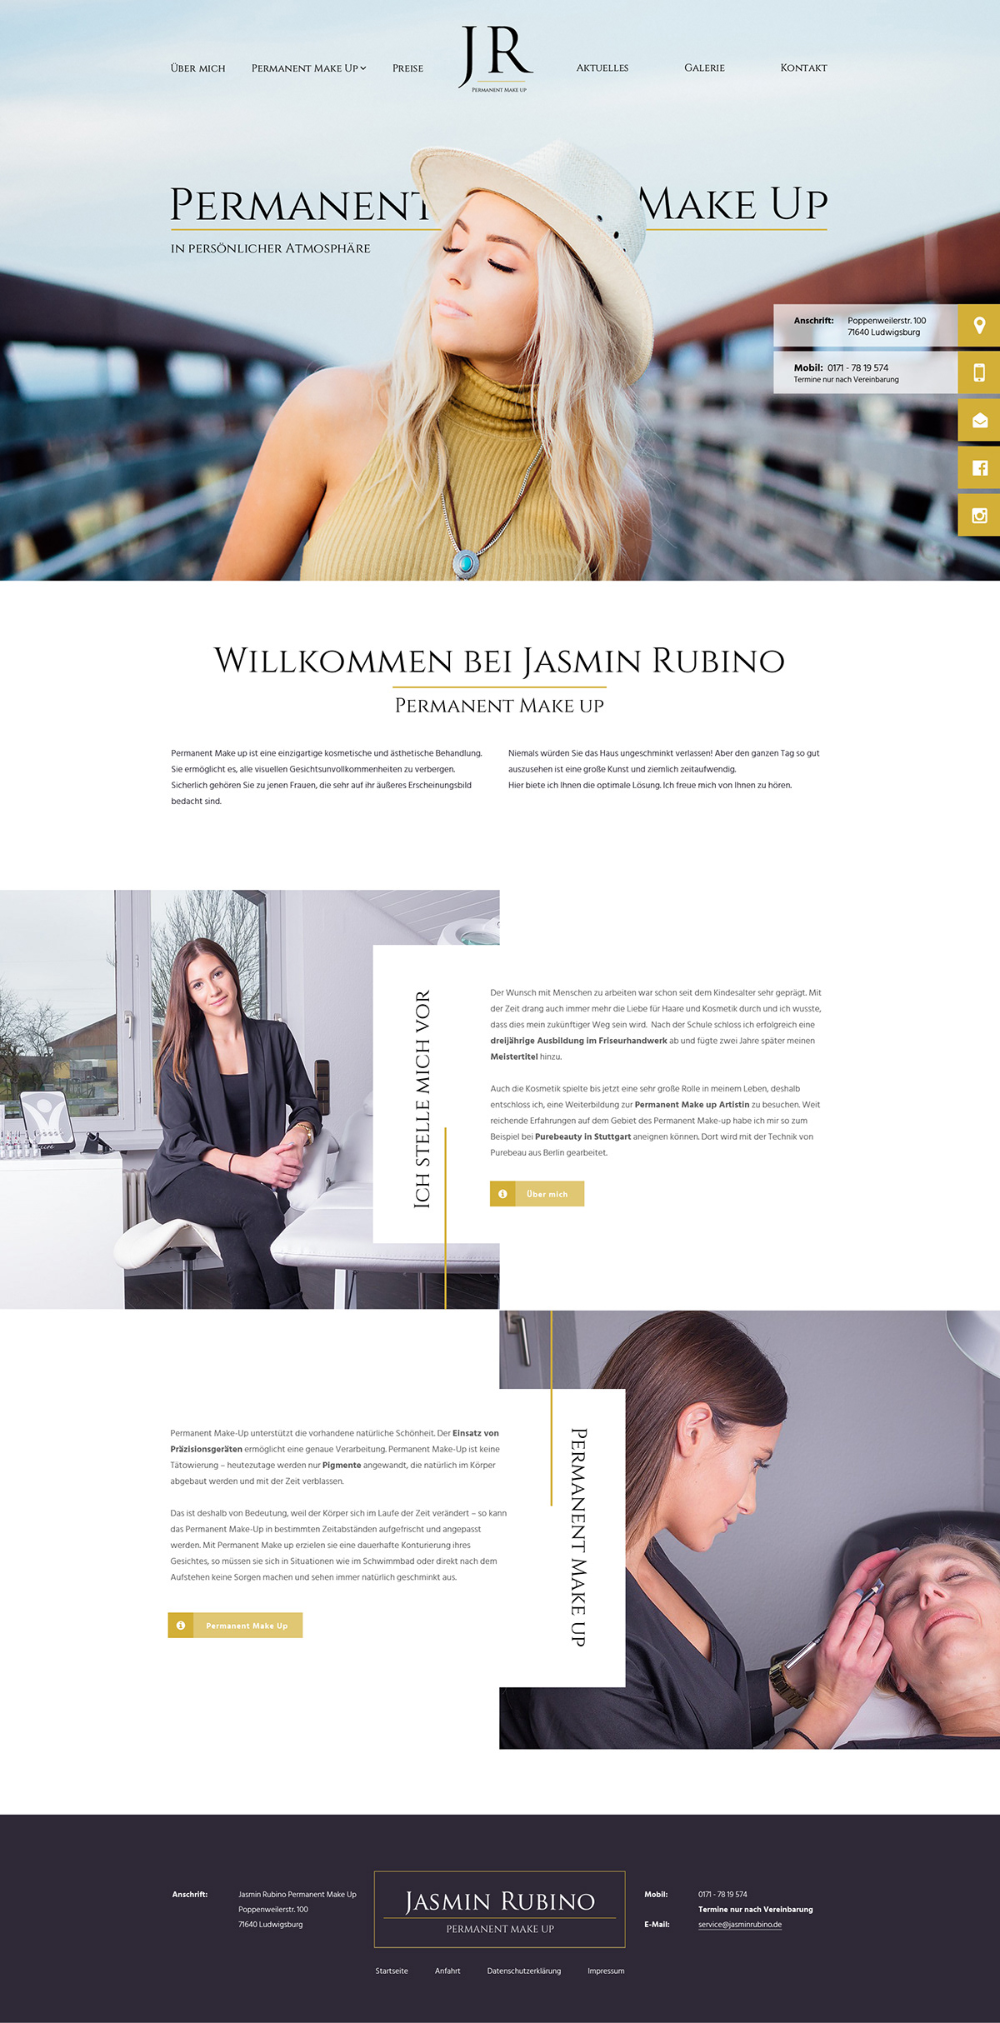 Jasmin Rubino Permanent Make Up Website Design On Behance In 2020 Website Design How To Make Make Up